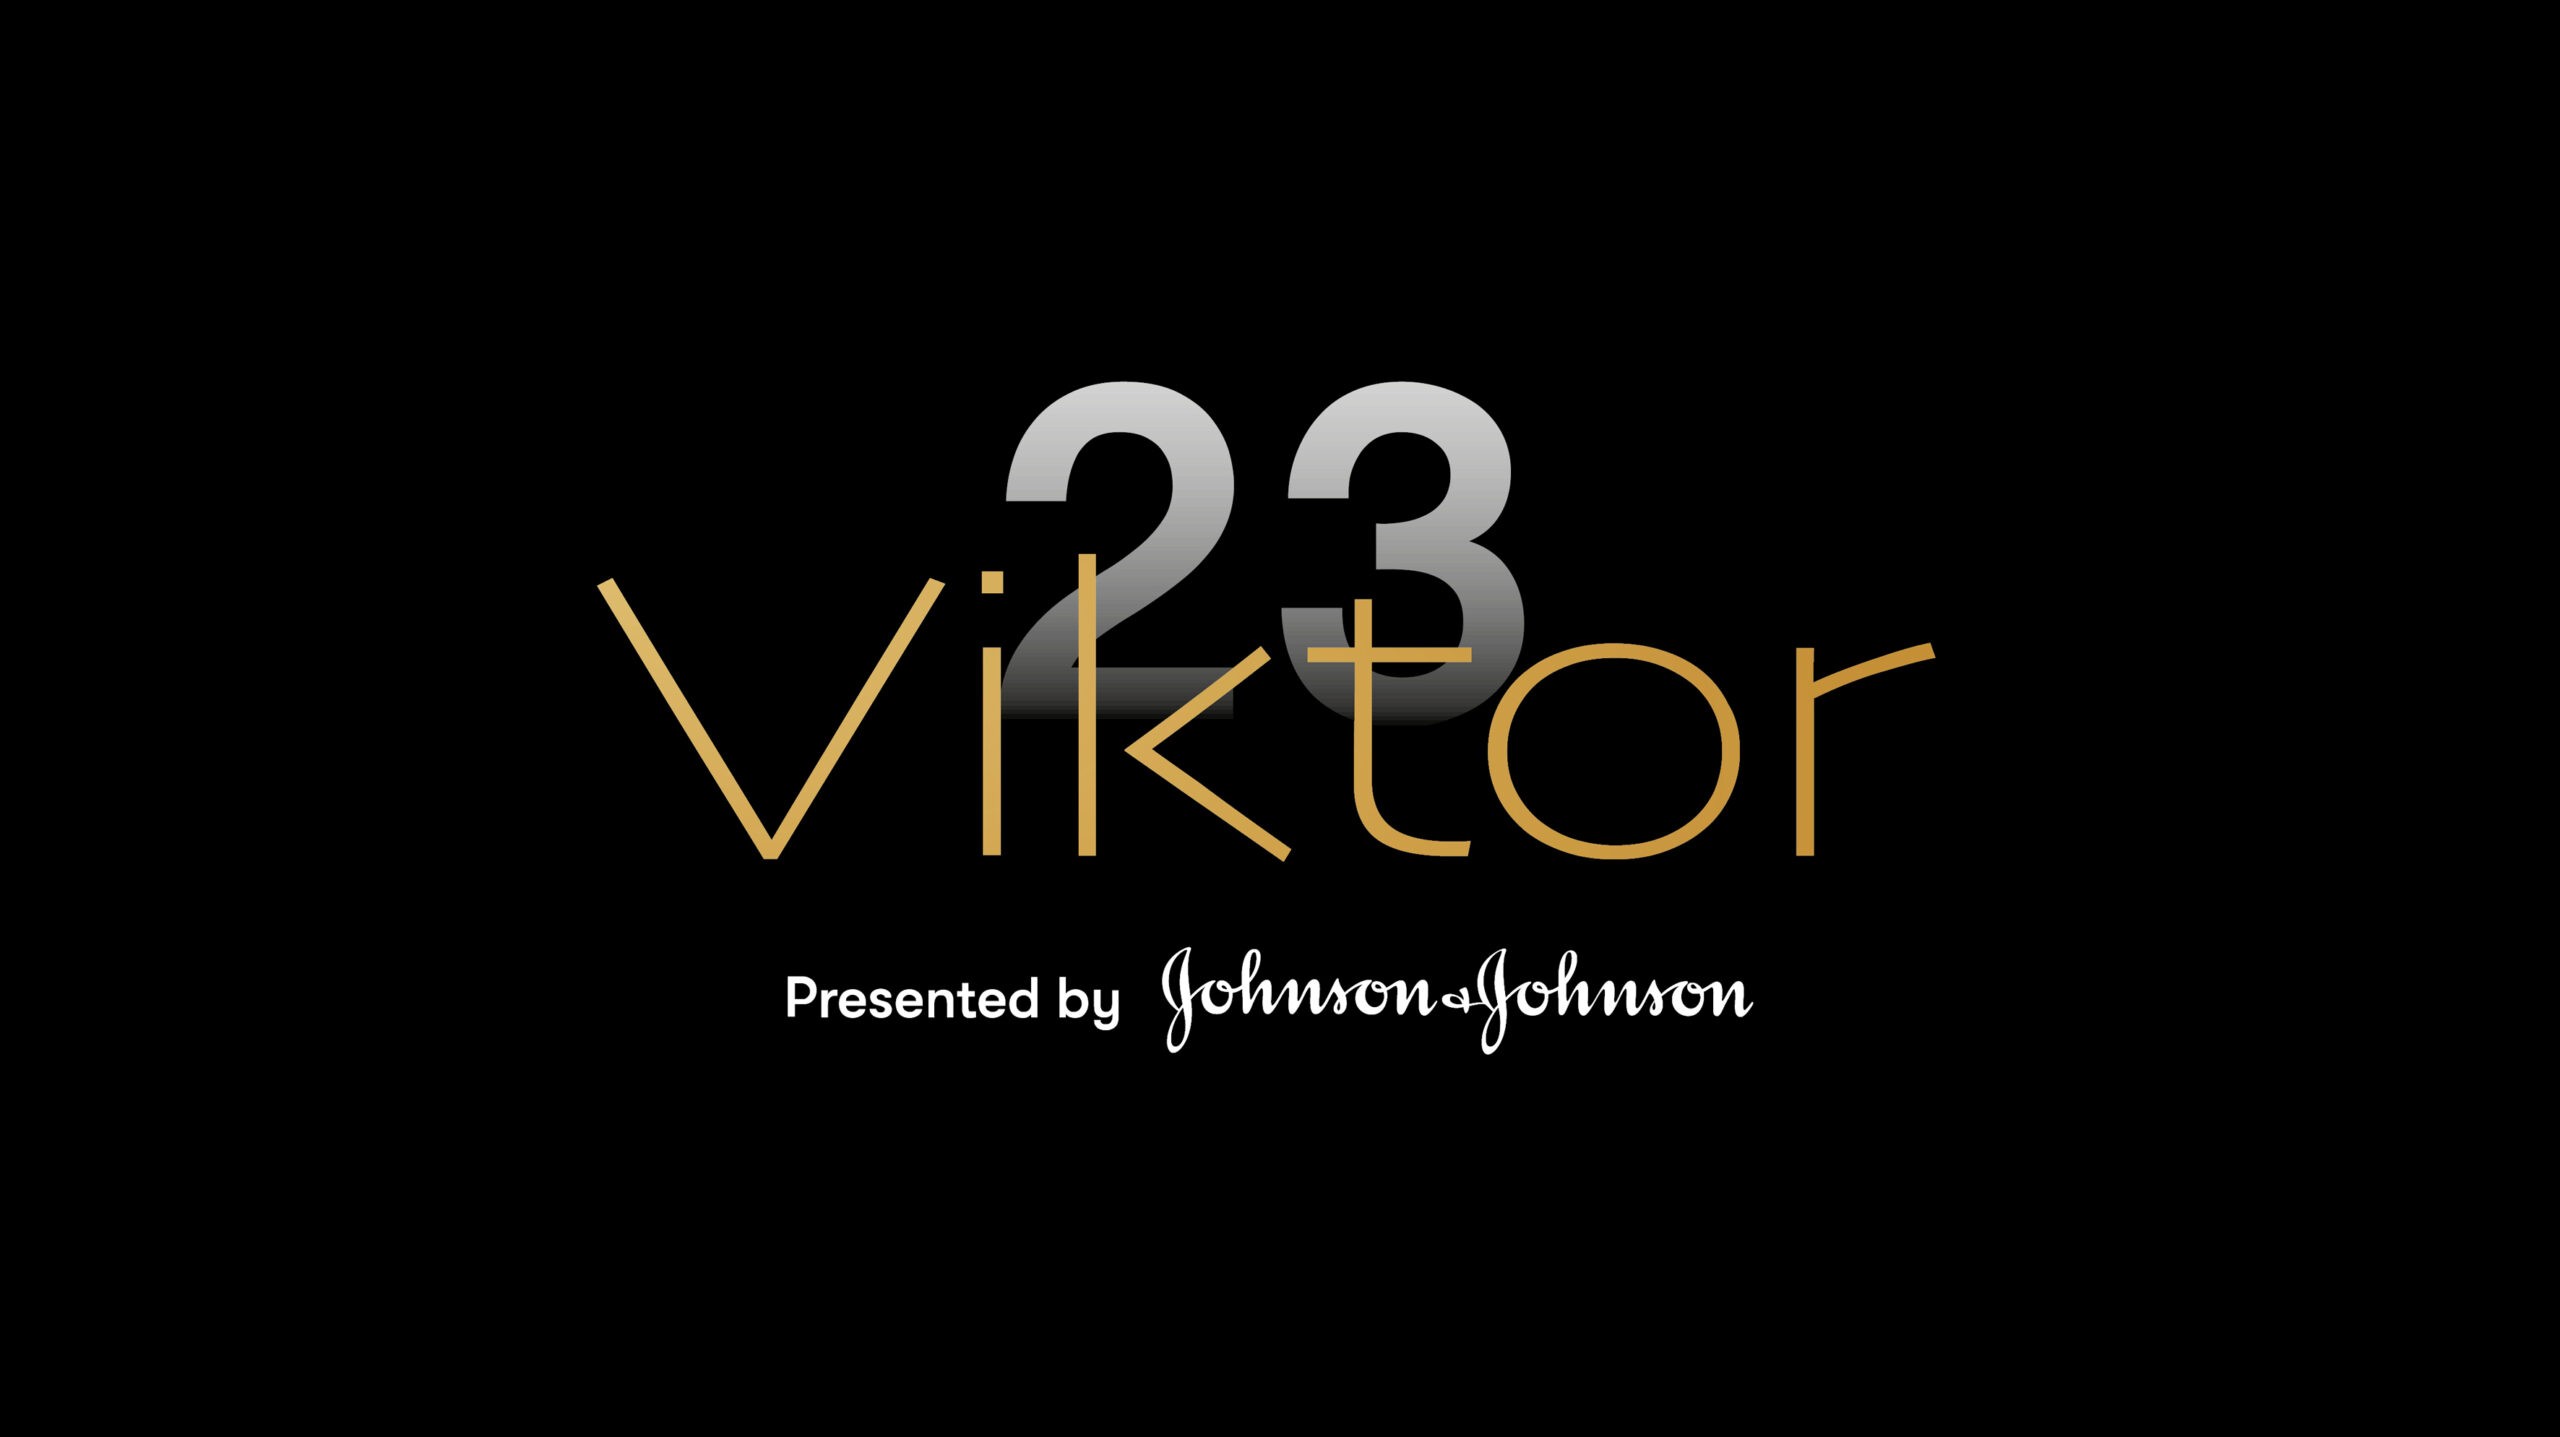 Viktor - ab sofort nominieren!